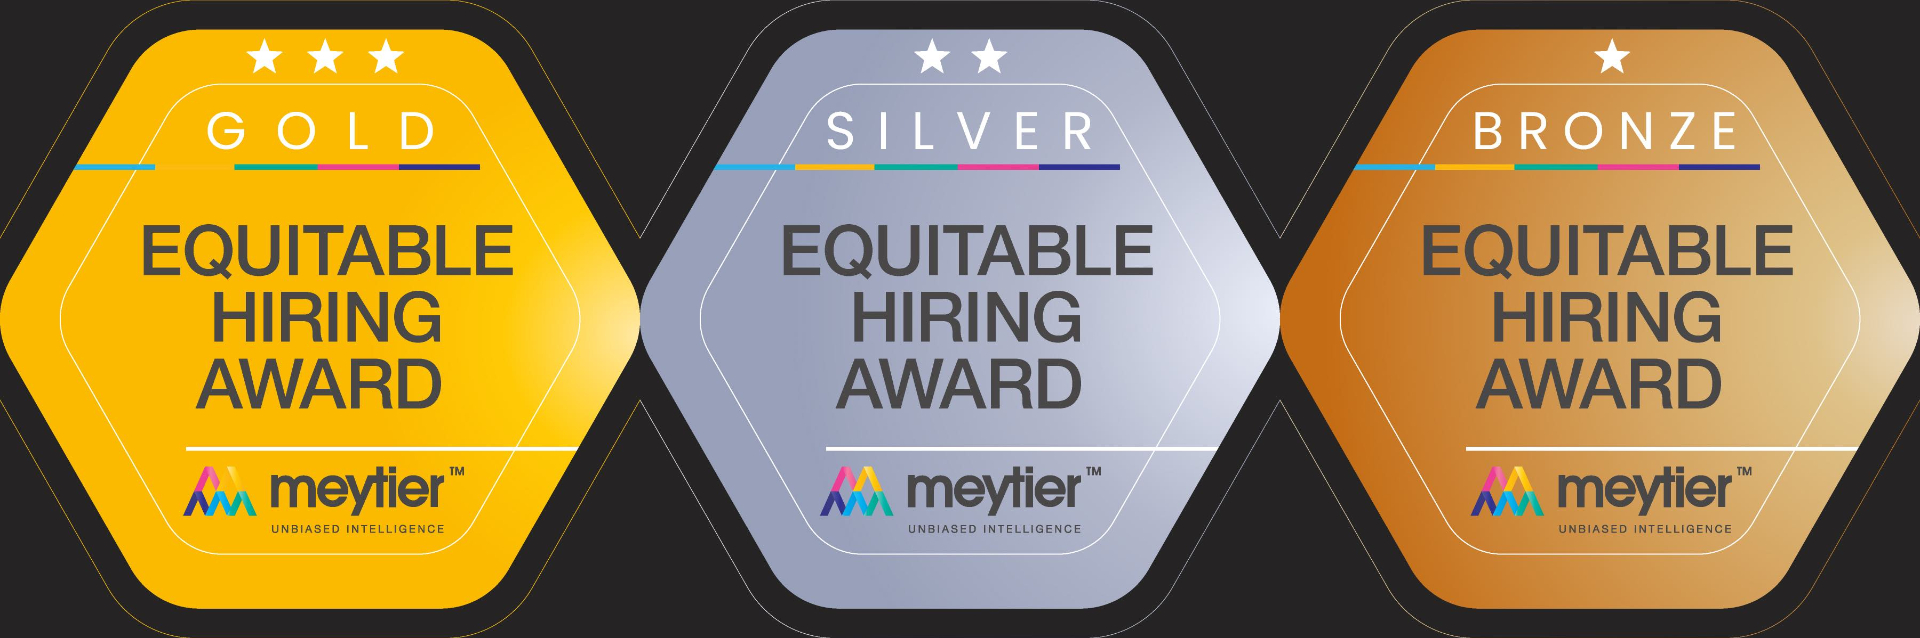 Meytier-Equitable-Hiring-Awards